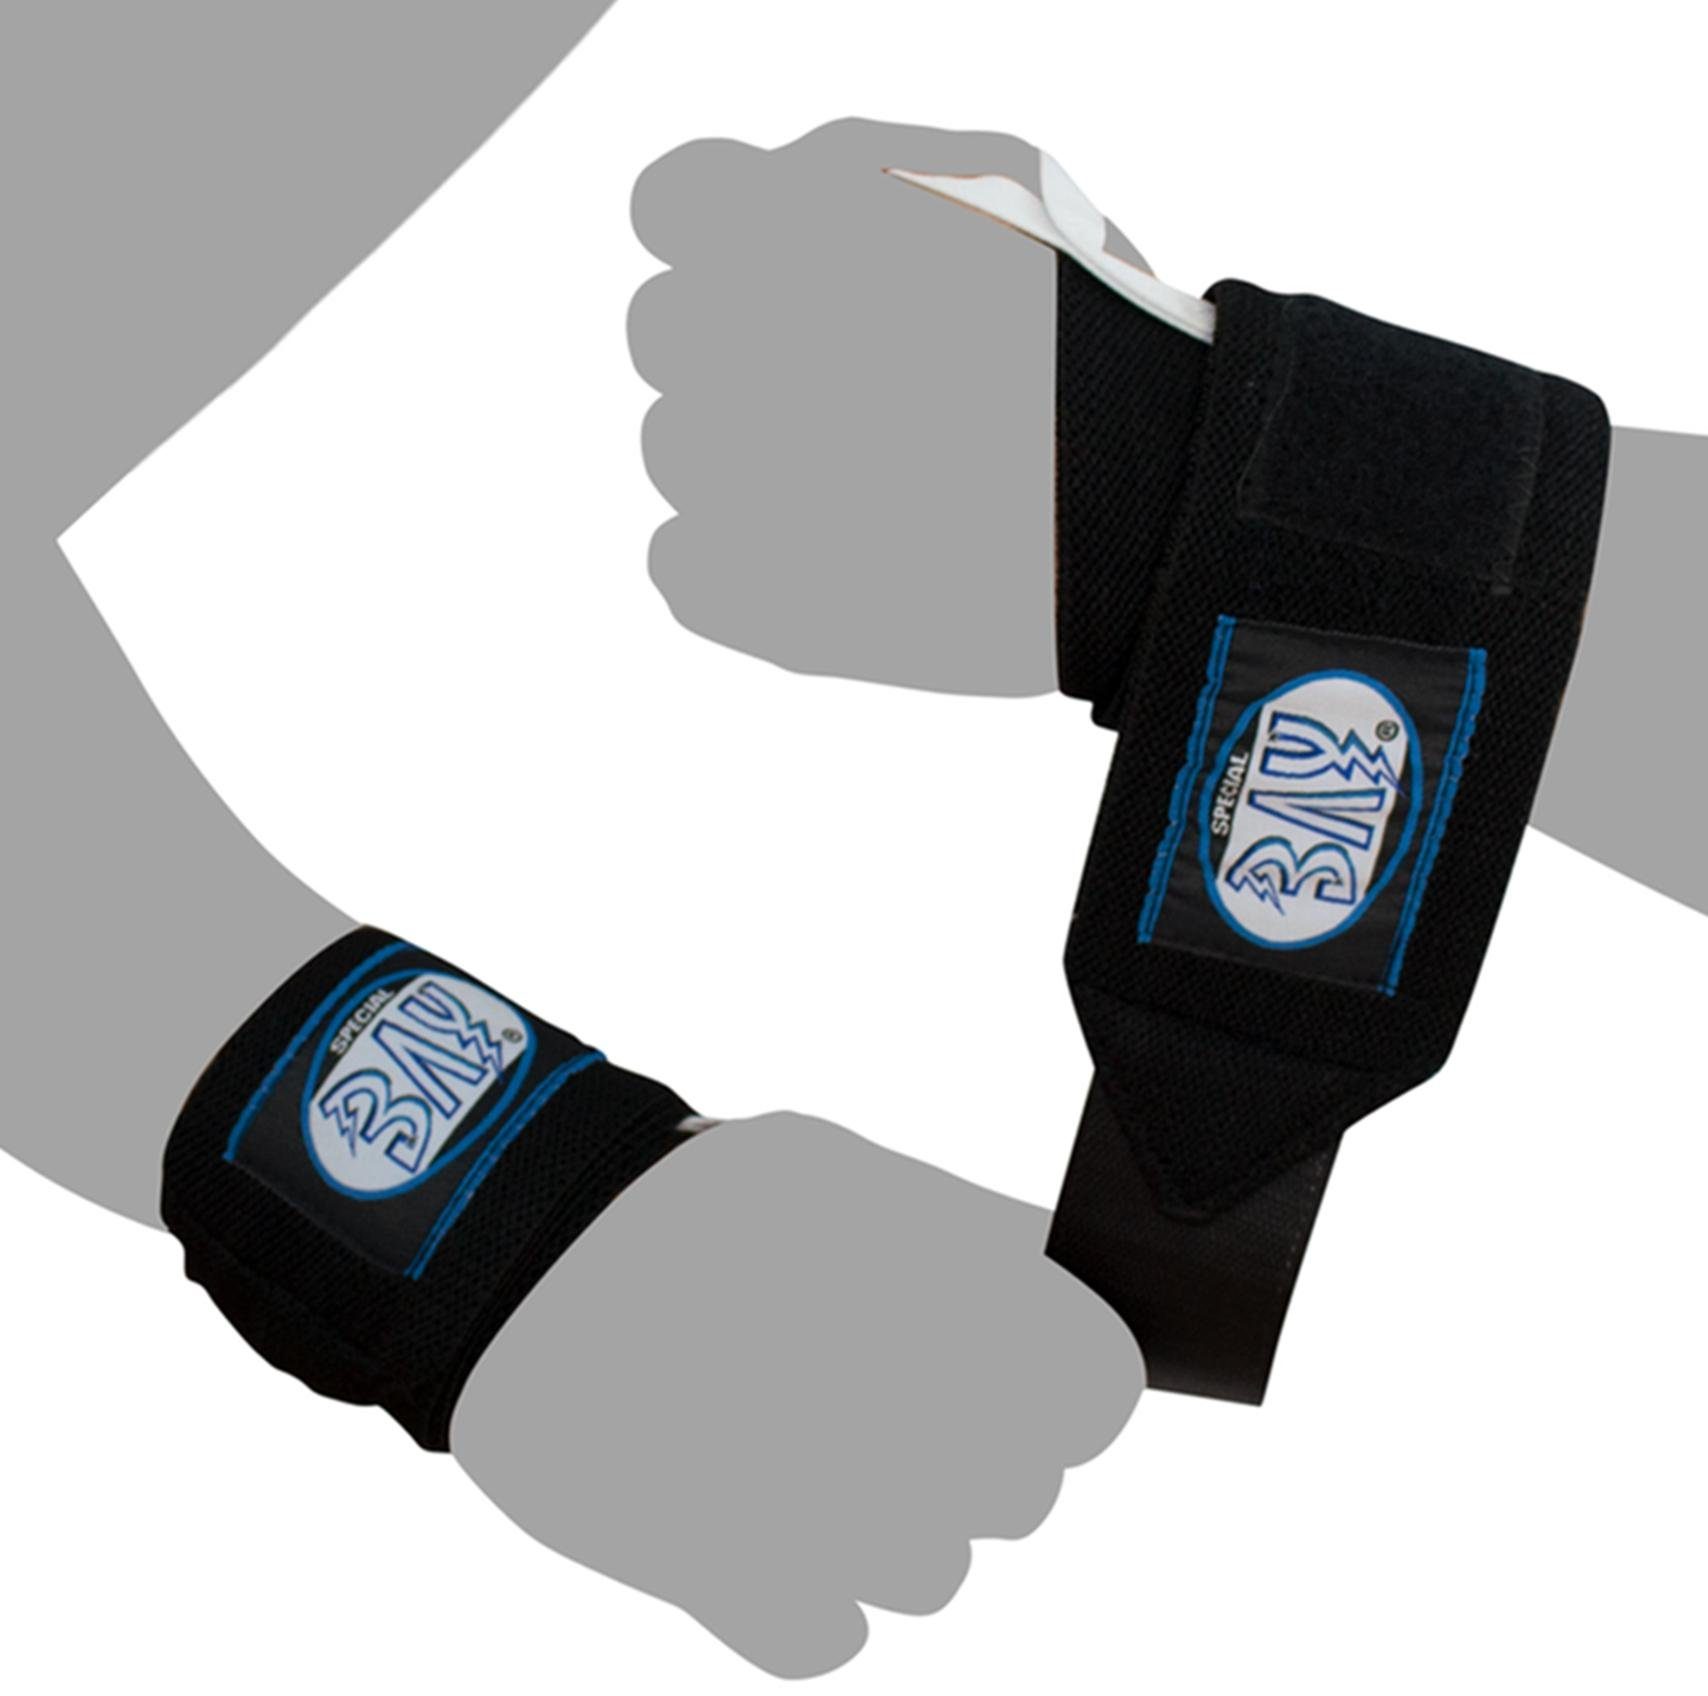 Gewichtheben Wrist 36 schwarz Boxbandagen Wraps Handbandagen BAY-Sports cm